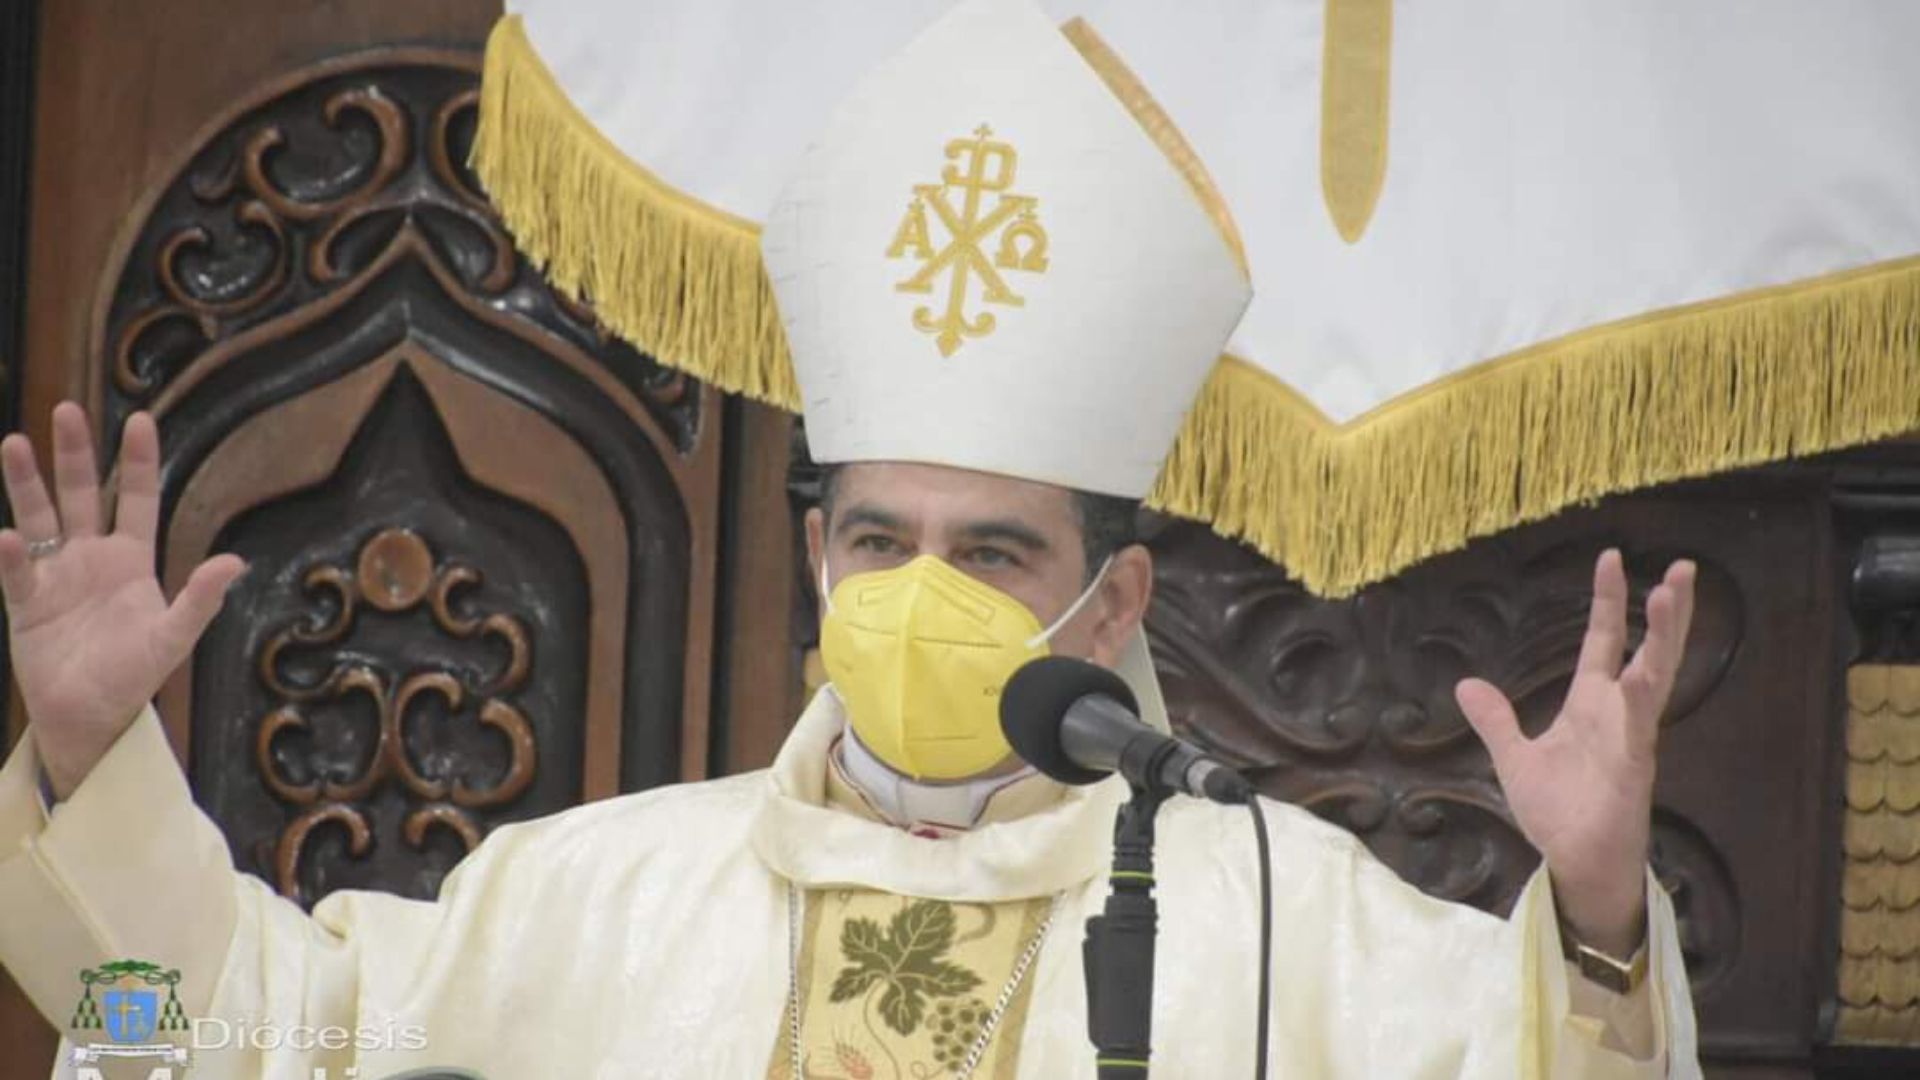 Cenidh to Ortega: "What is happening with Monsignor Álvarez?"